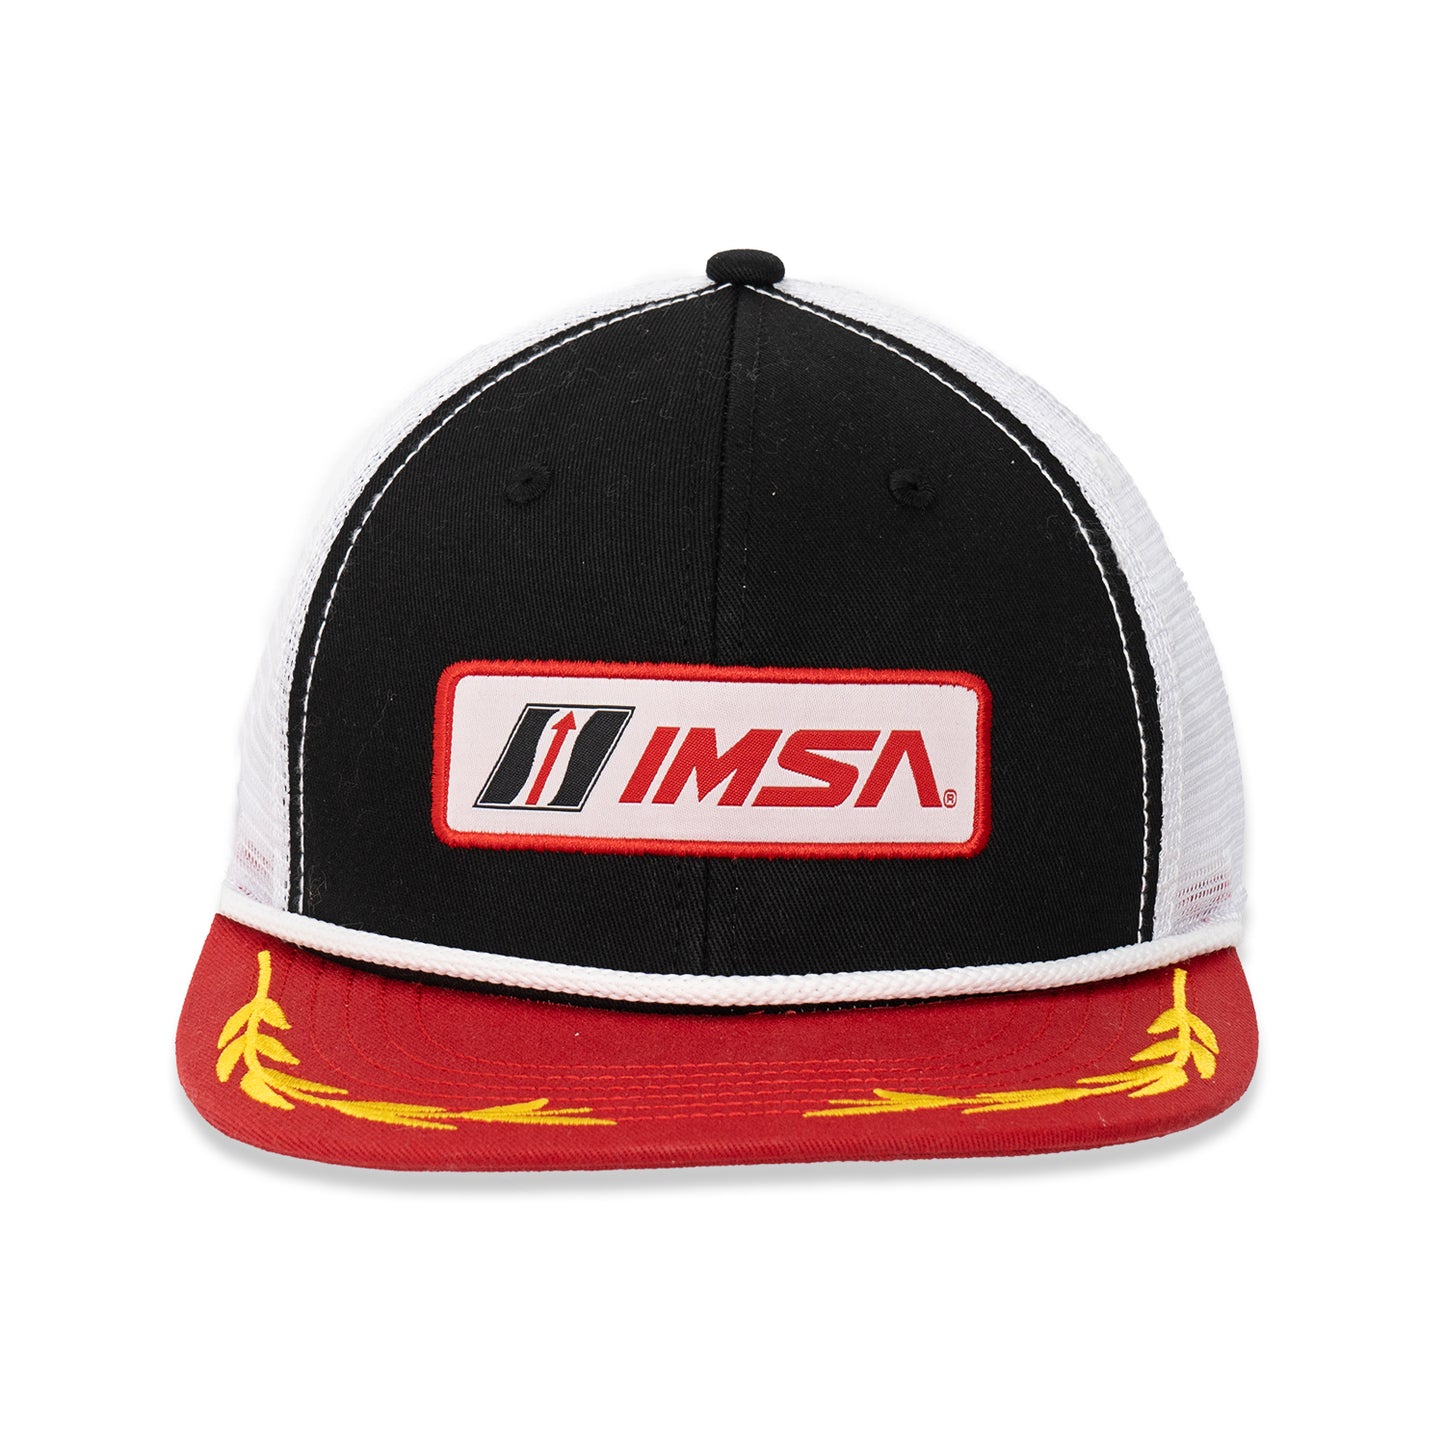 IMSA Flatbill Snapback Hat - Black/Red/White